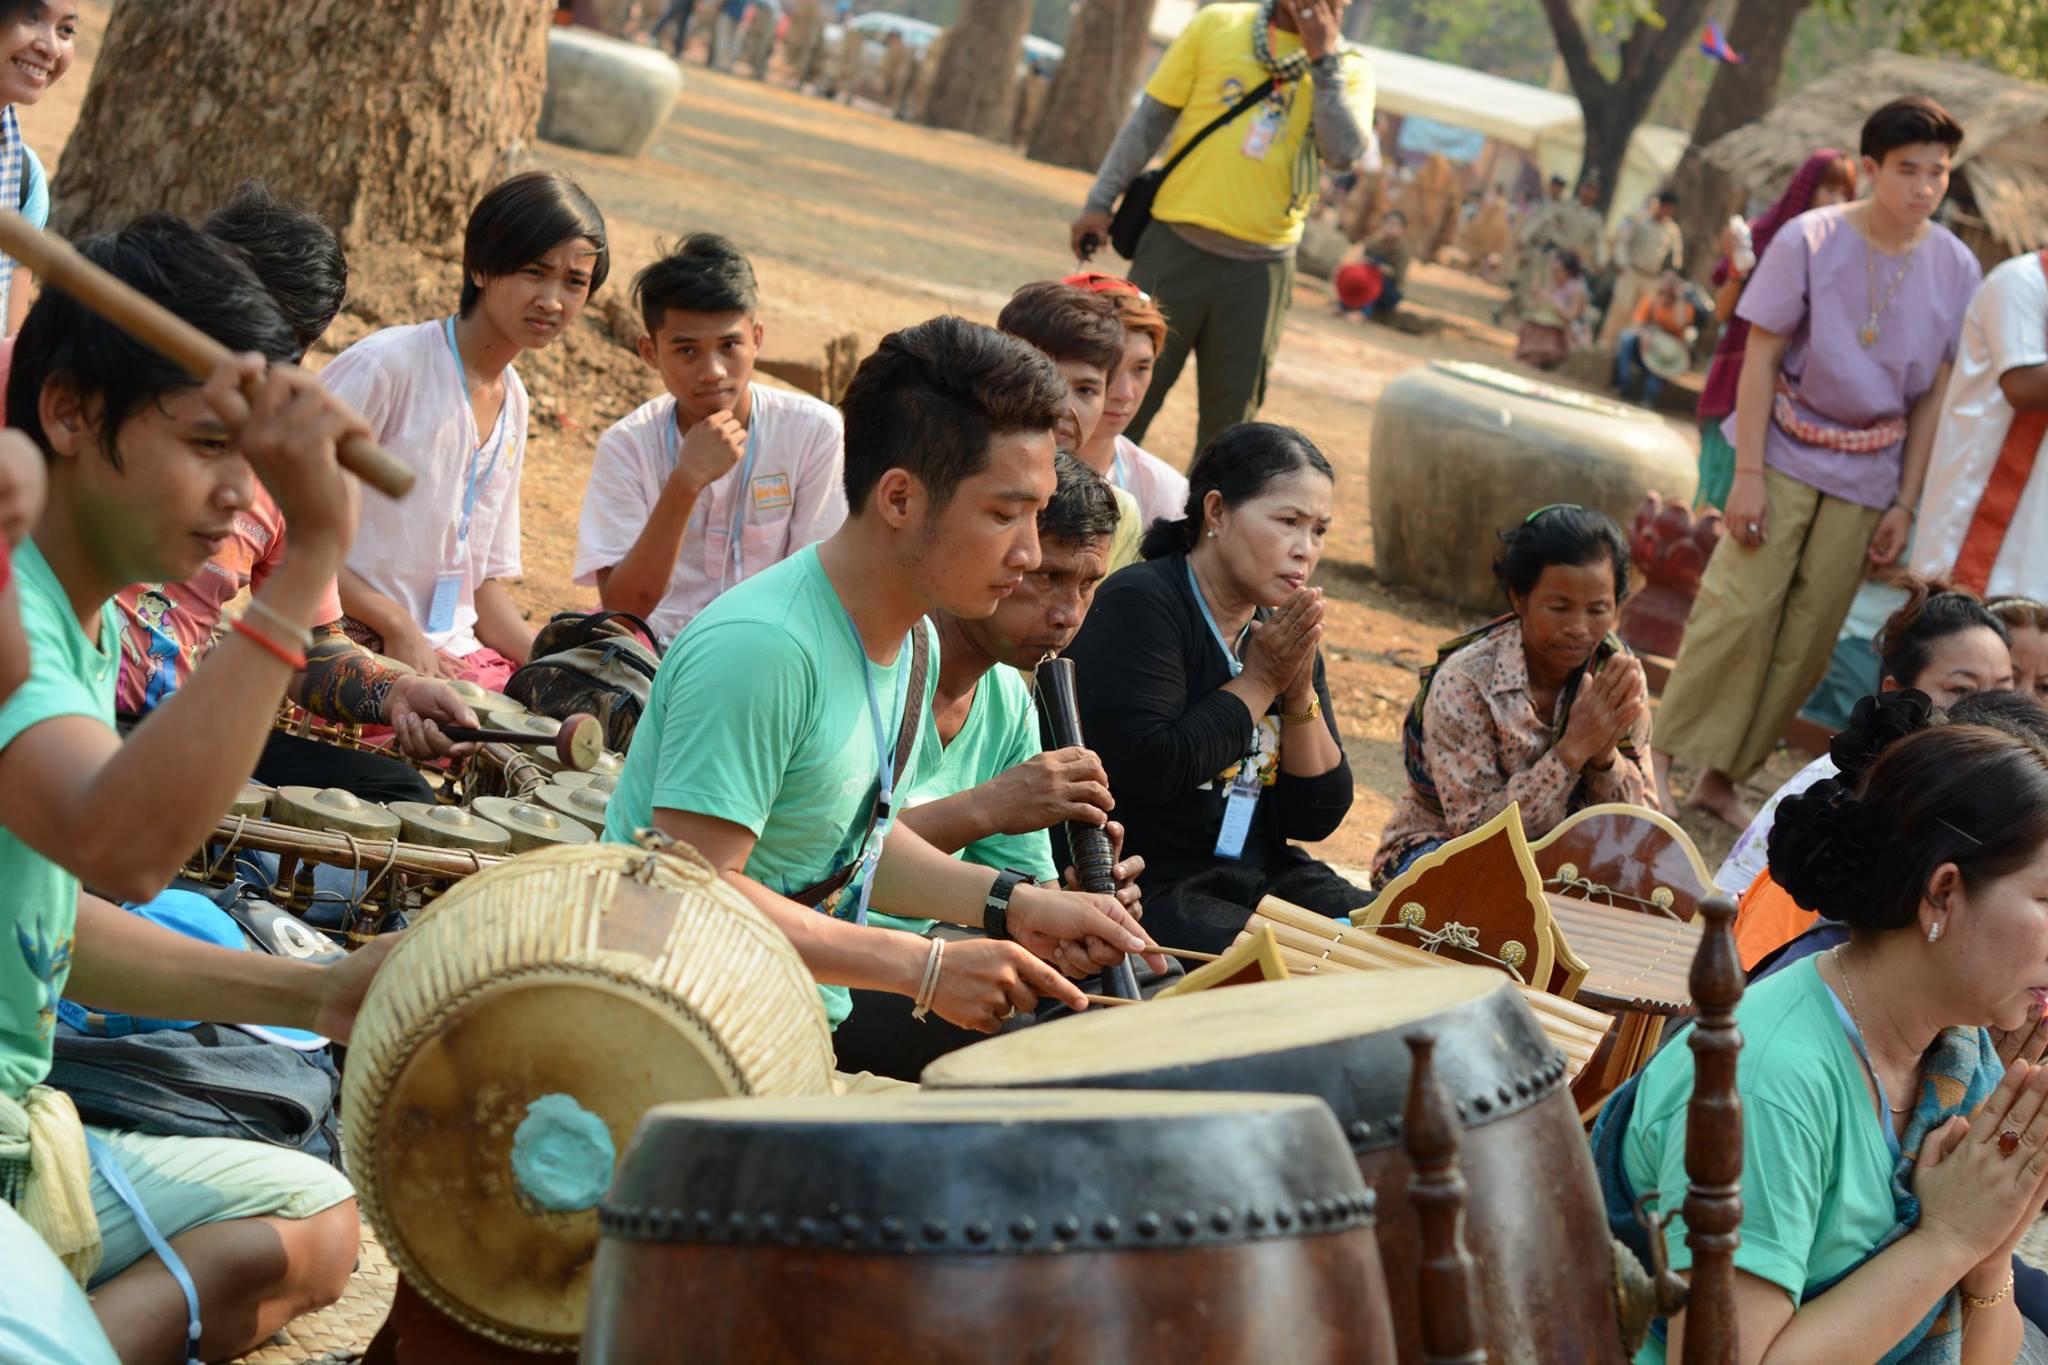 Khmer new year activities